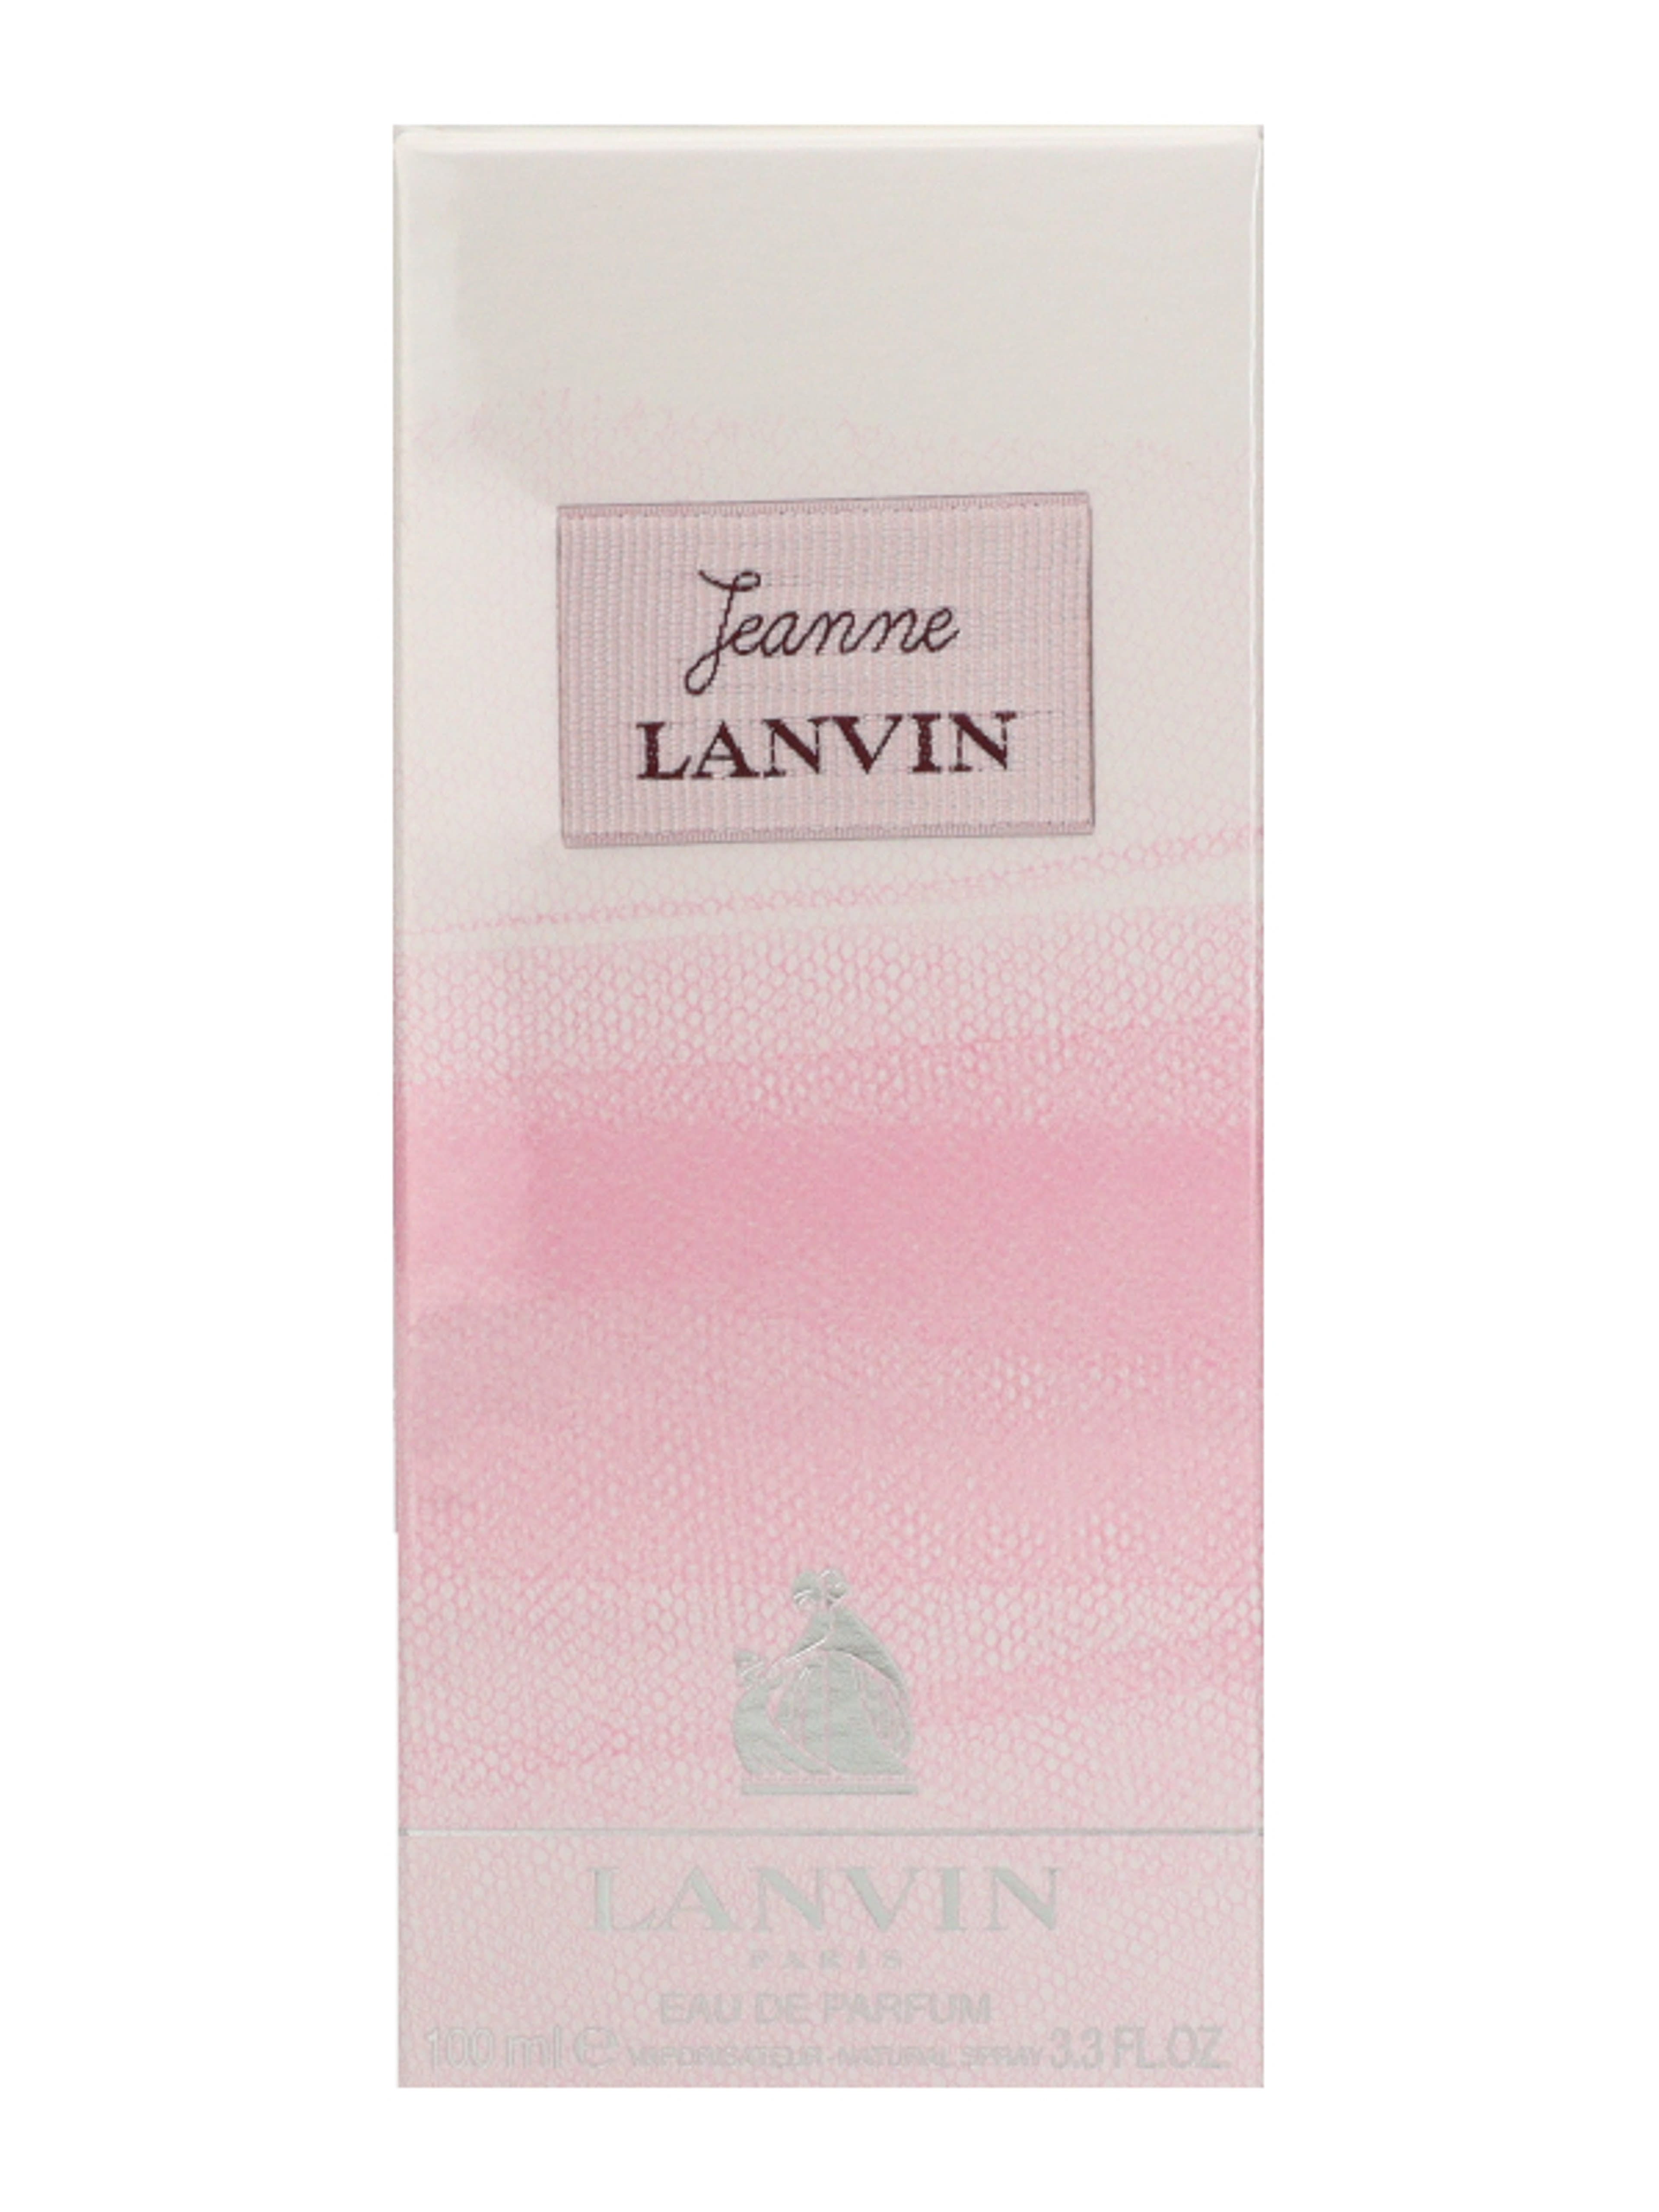 Lanvin Jeanne női eau de perfume - 100 ml